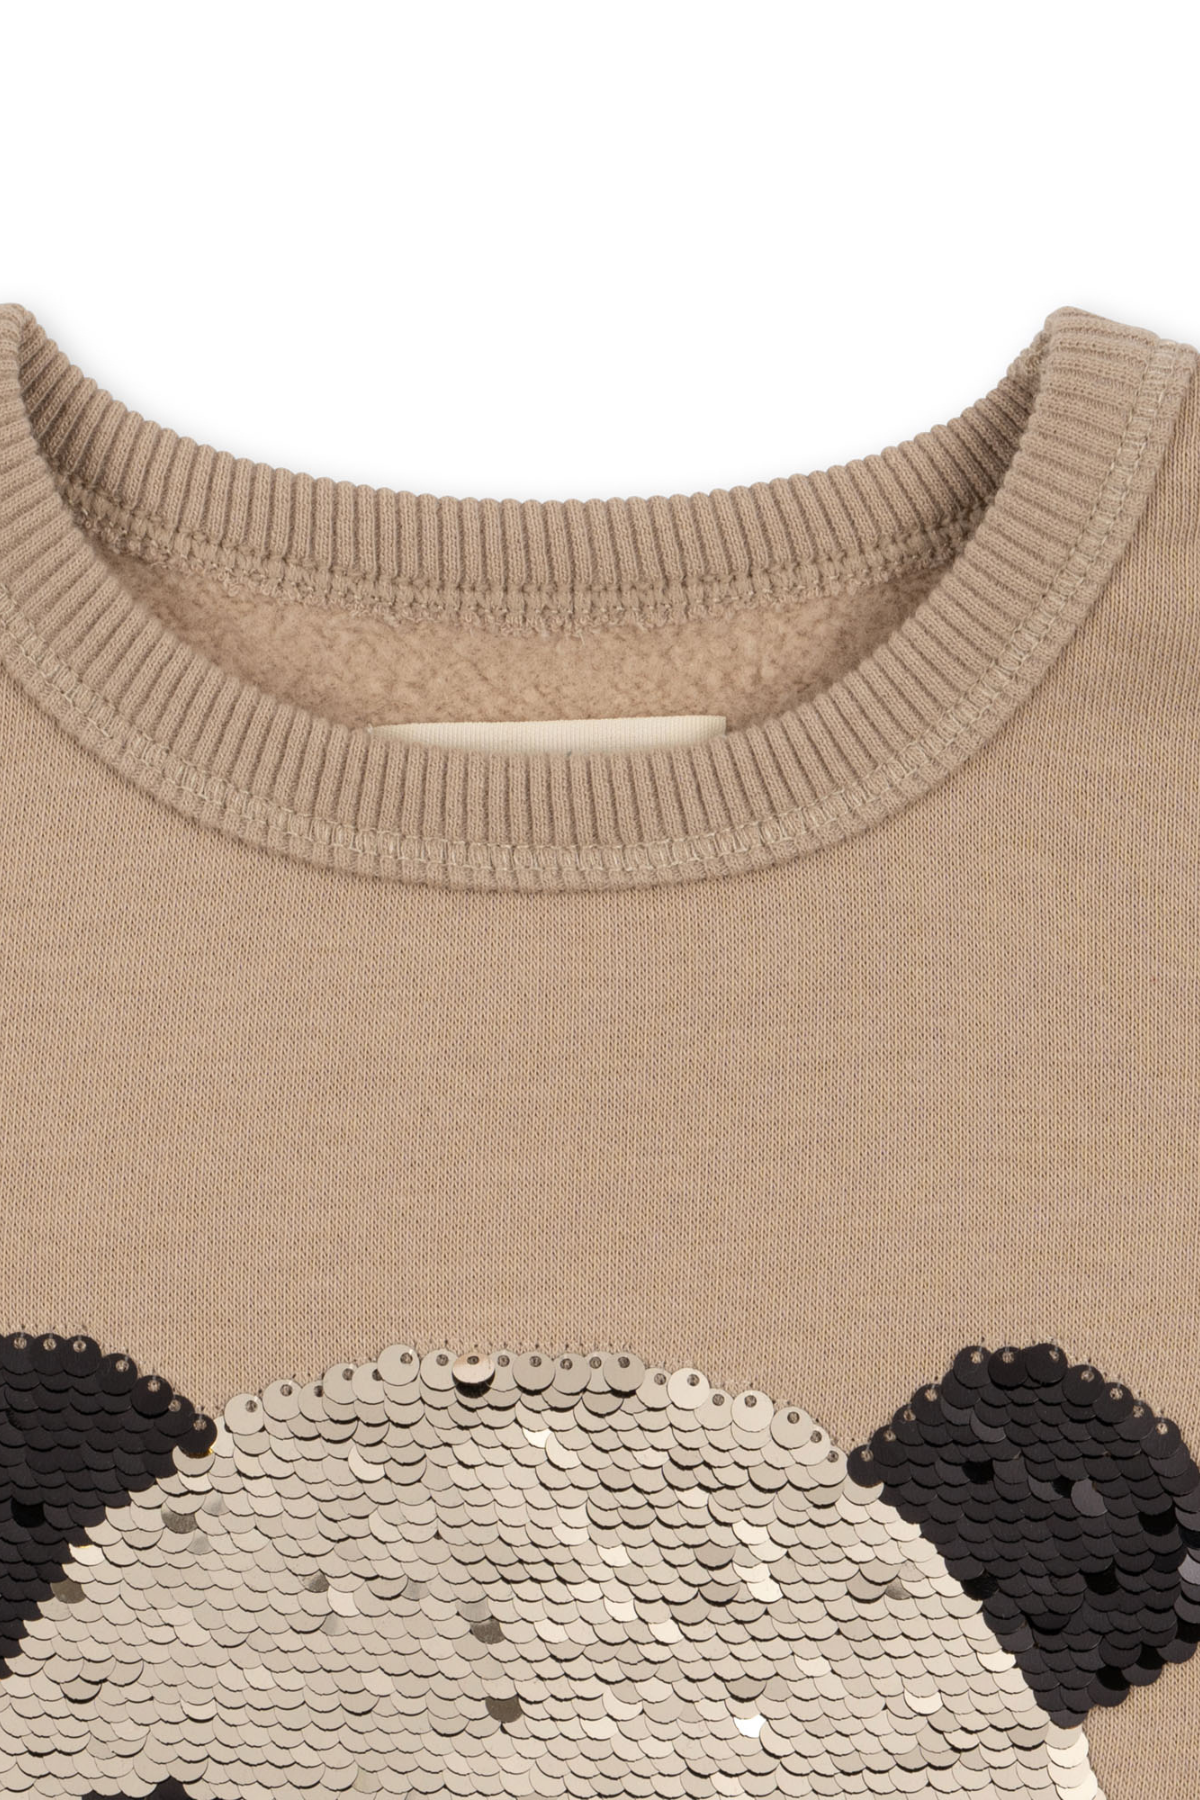 Kinder-Sweatshirt “Lou Oxford Tan”